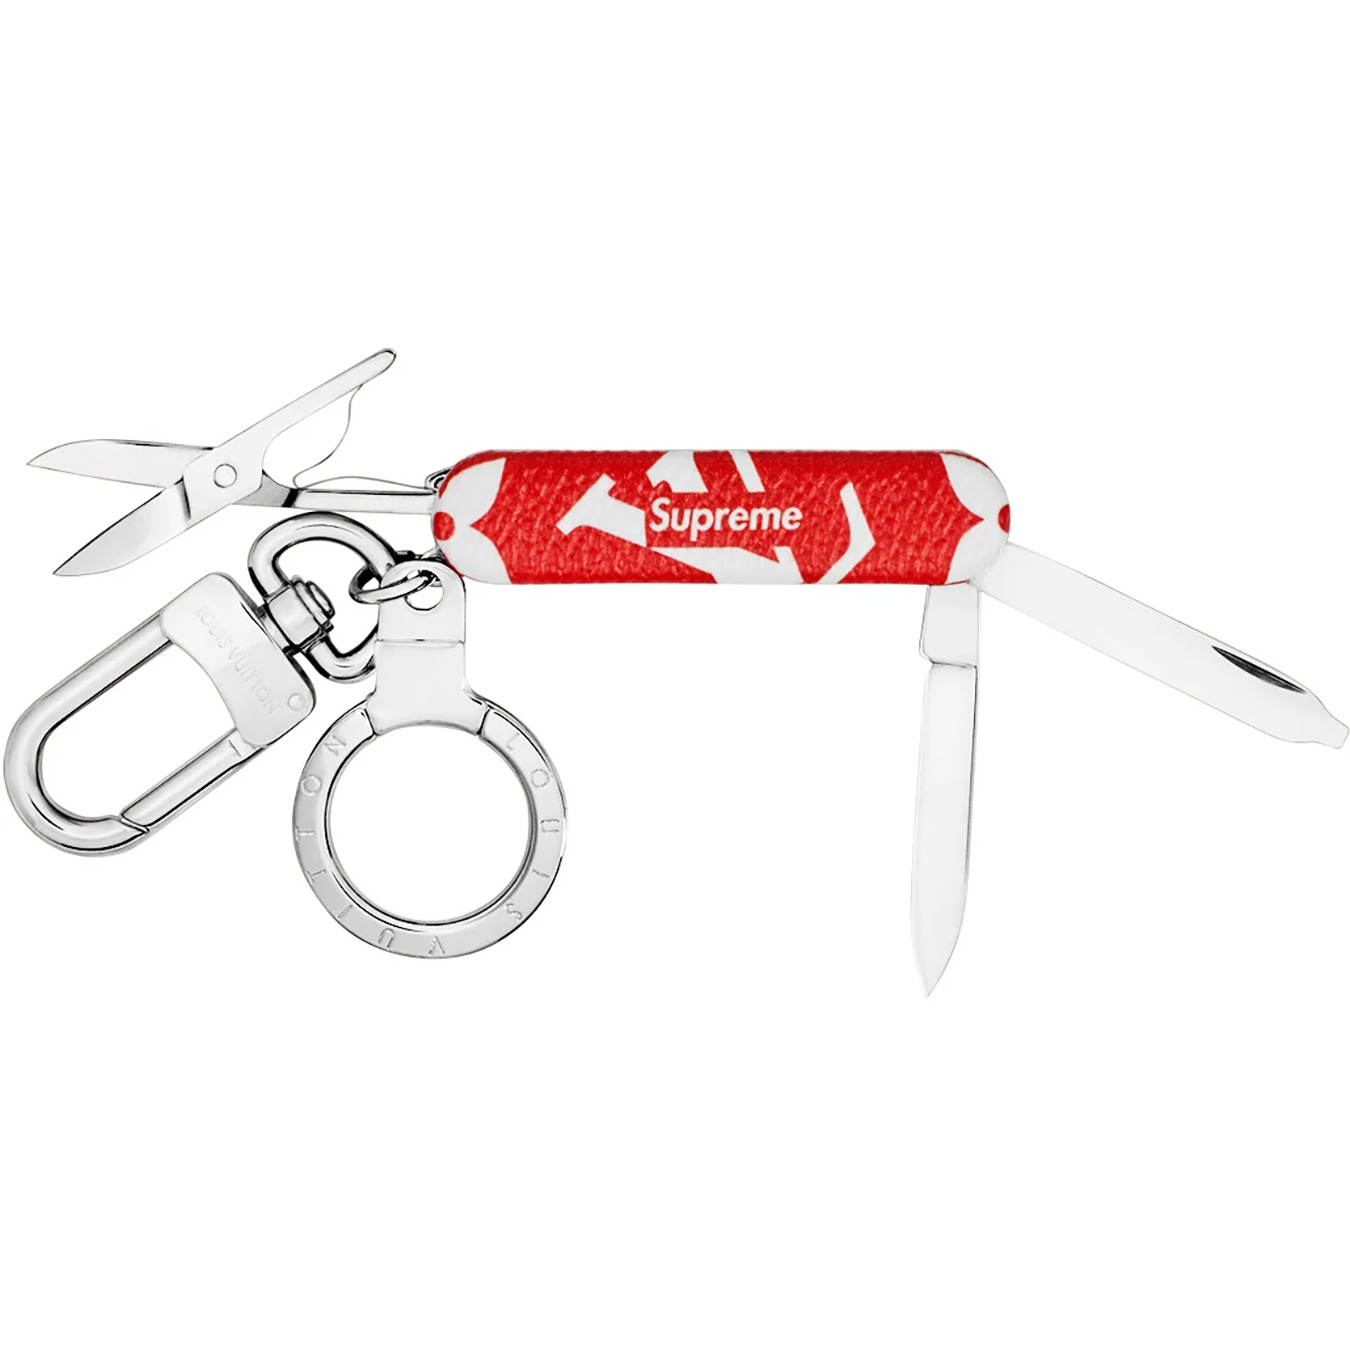 Louis Vuitton/Supreme Pocket Knife Keychain